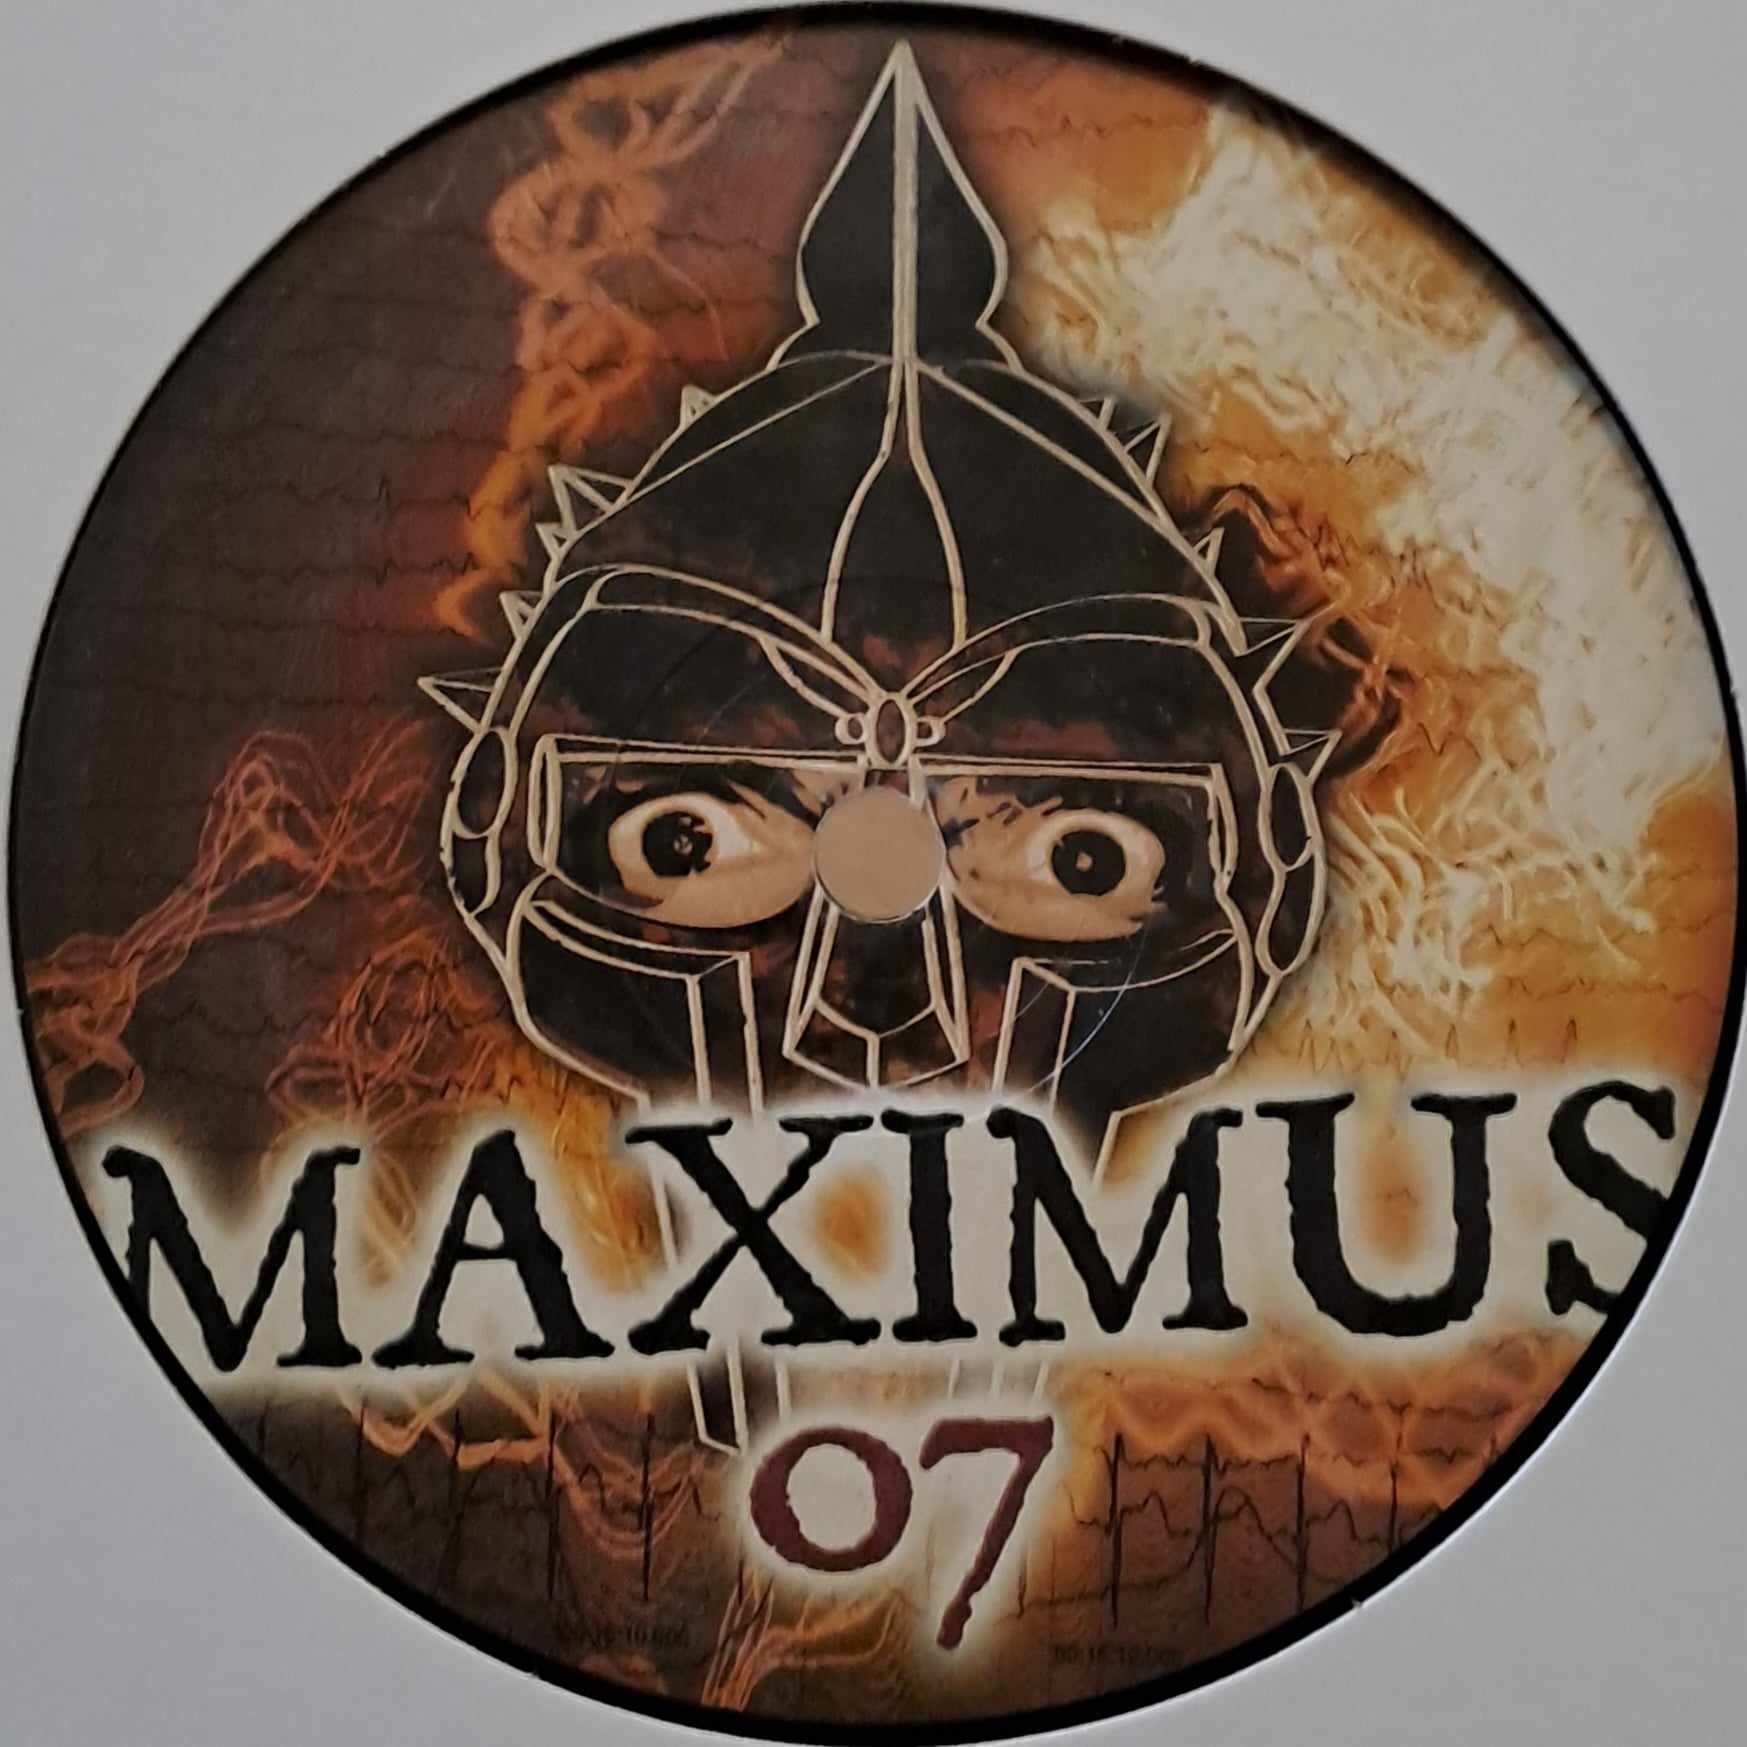 Maximus 07 - vinyle freetekno